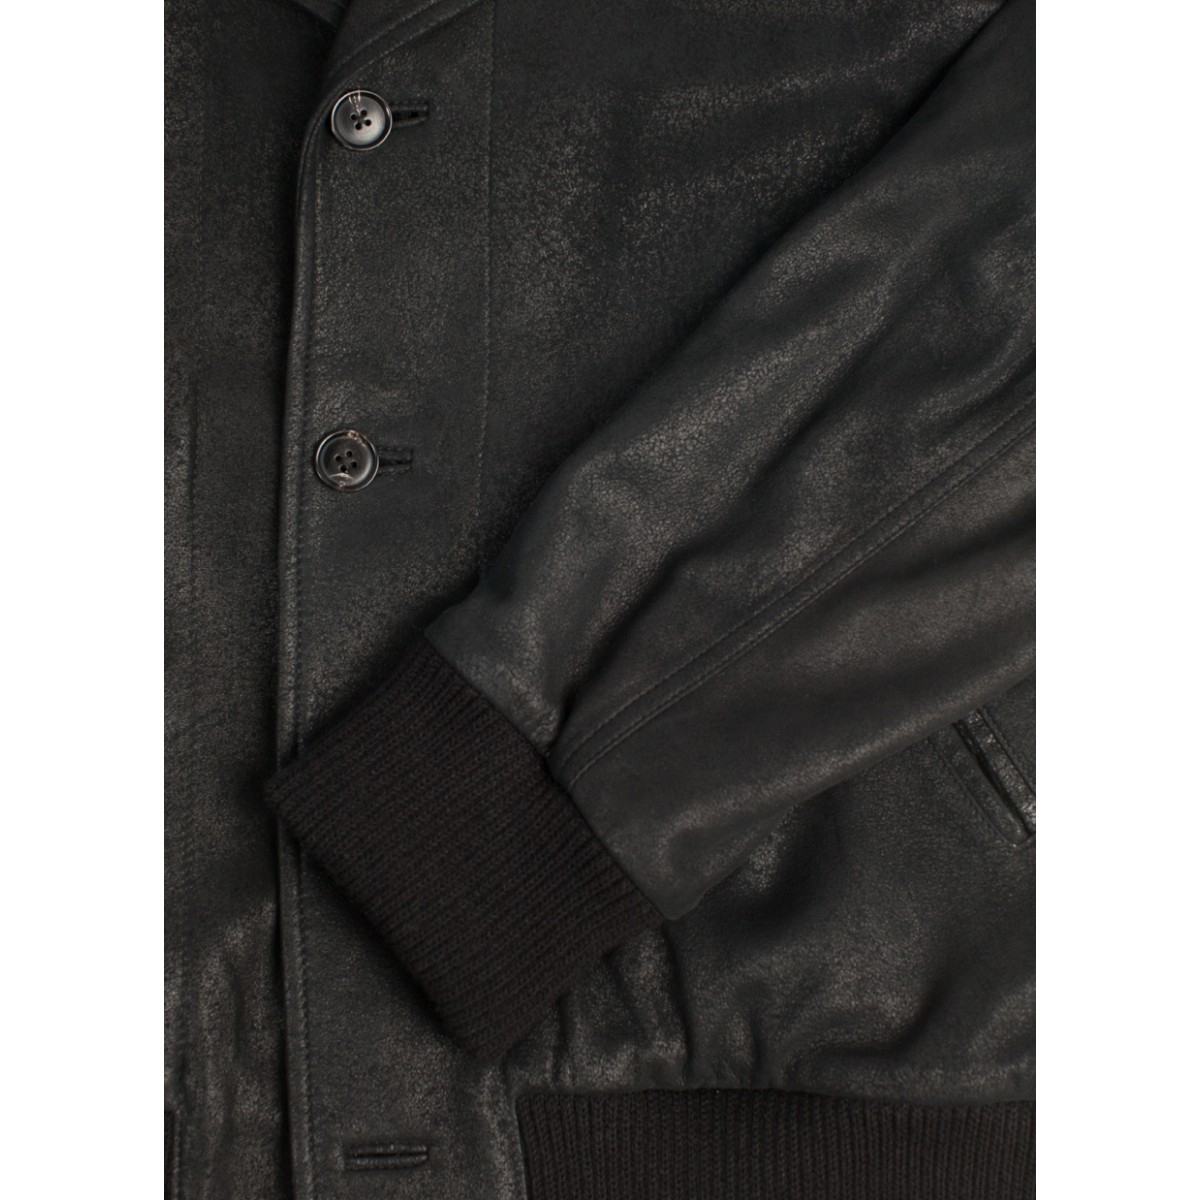 Lyst - Billy Reid Yeates Suede Jacket in Black for Men